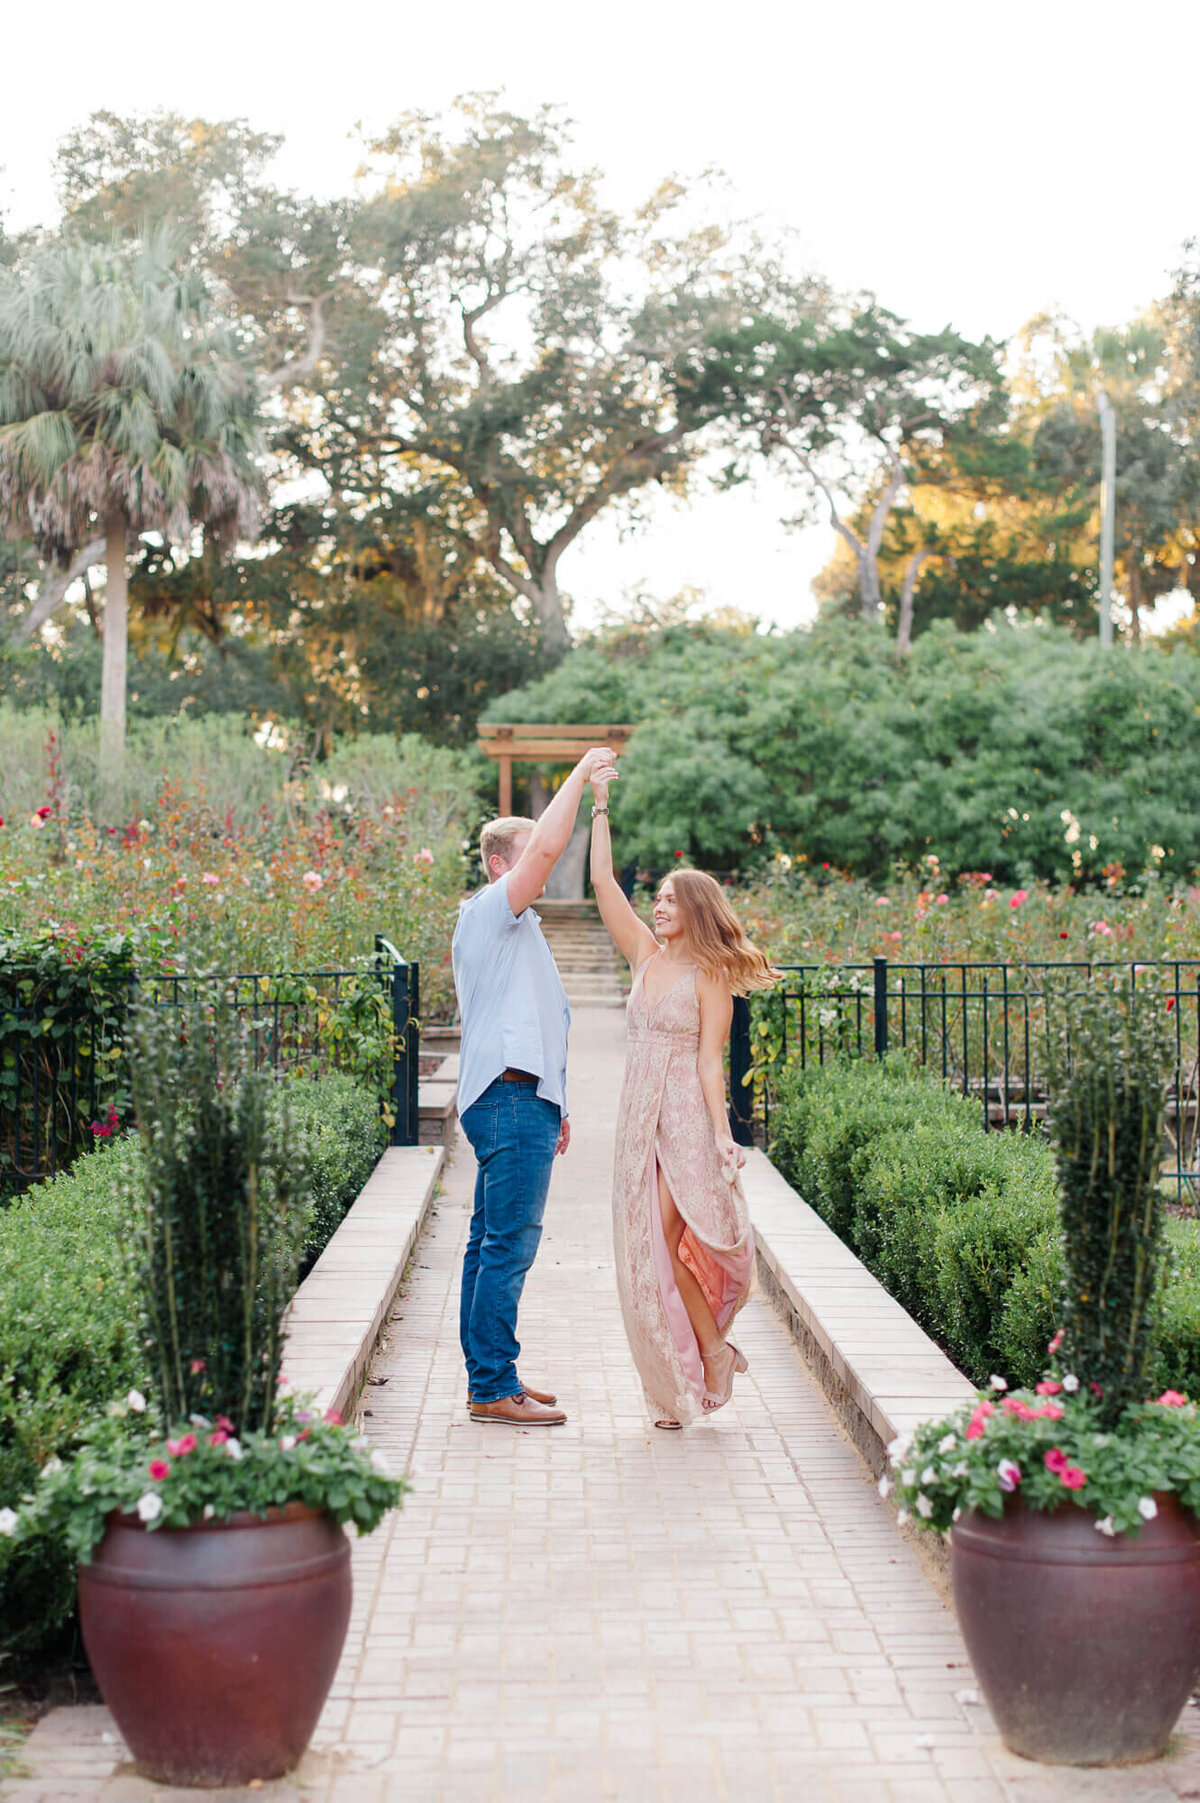 Orlando couples photographer captures couples dancing in the garden